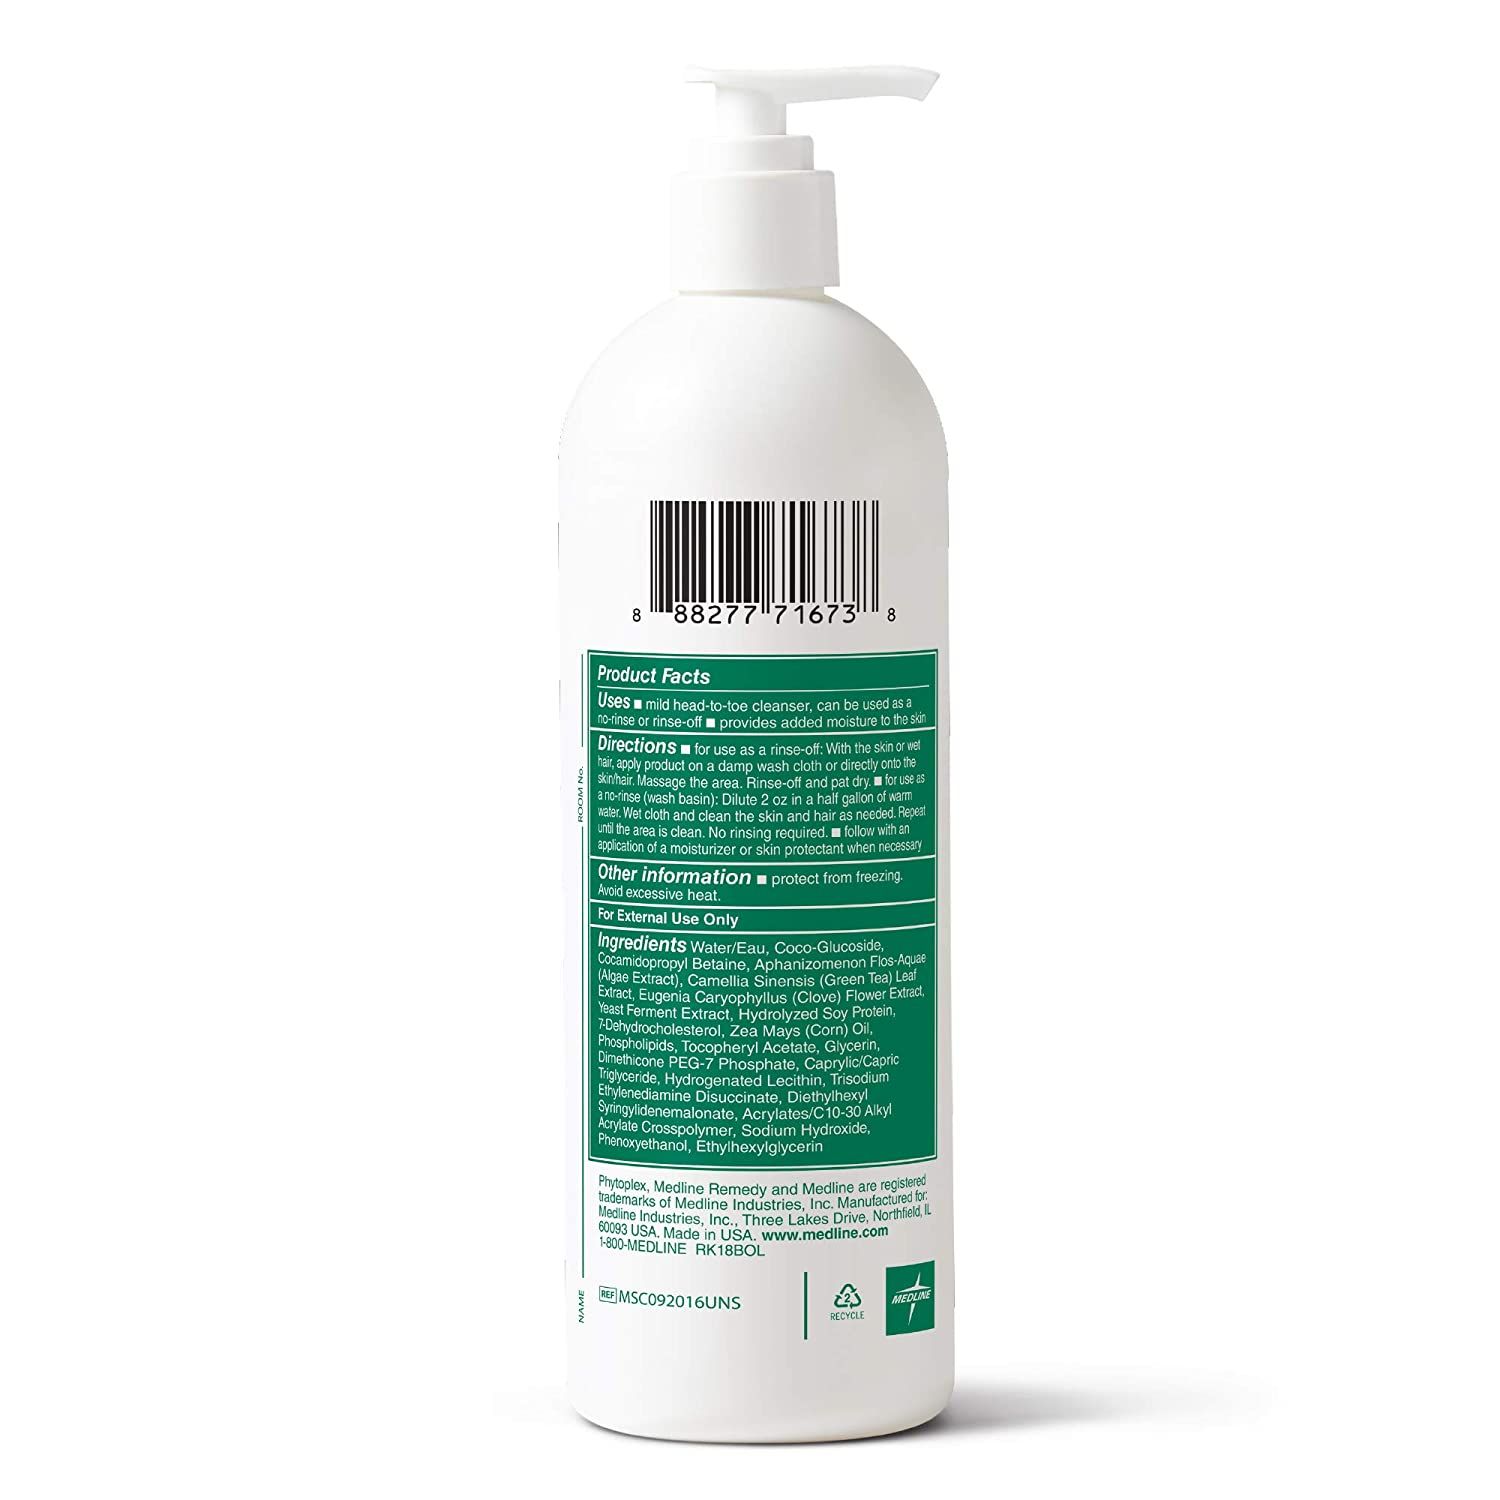 DISCMedline Remedy with Phytoplex Hydrating Cleansing Gel and Shampoo - 16 fl oz